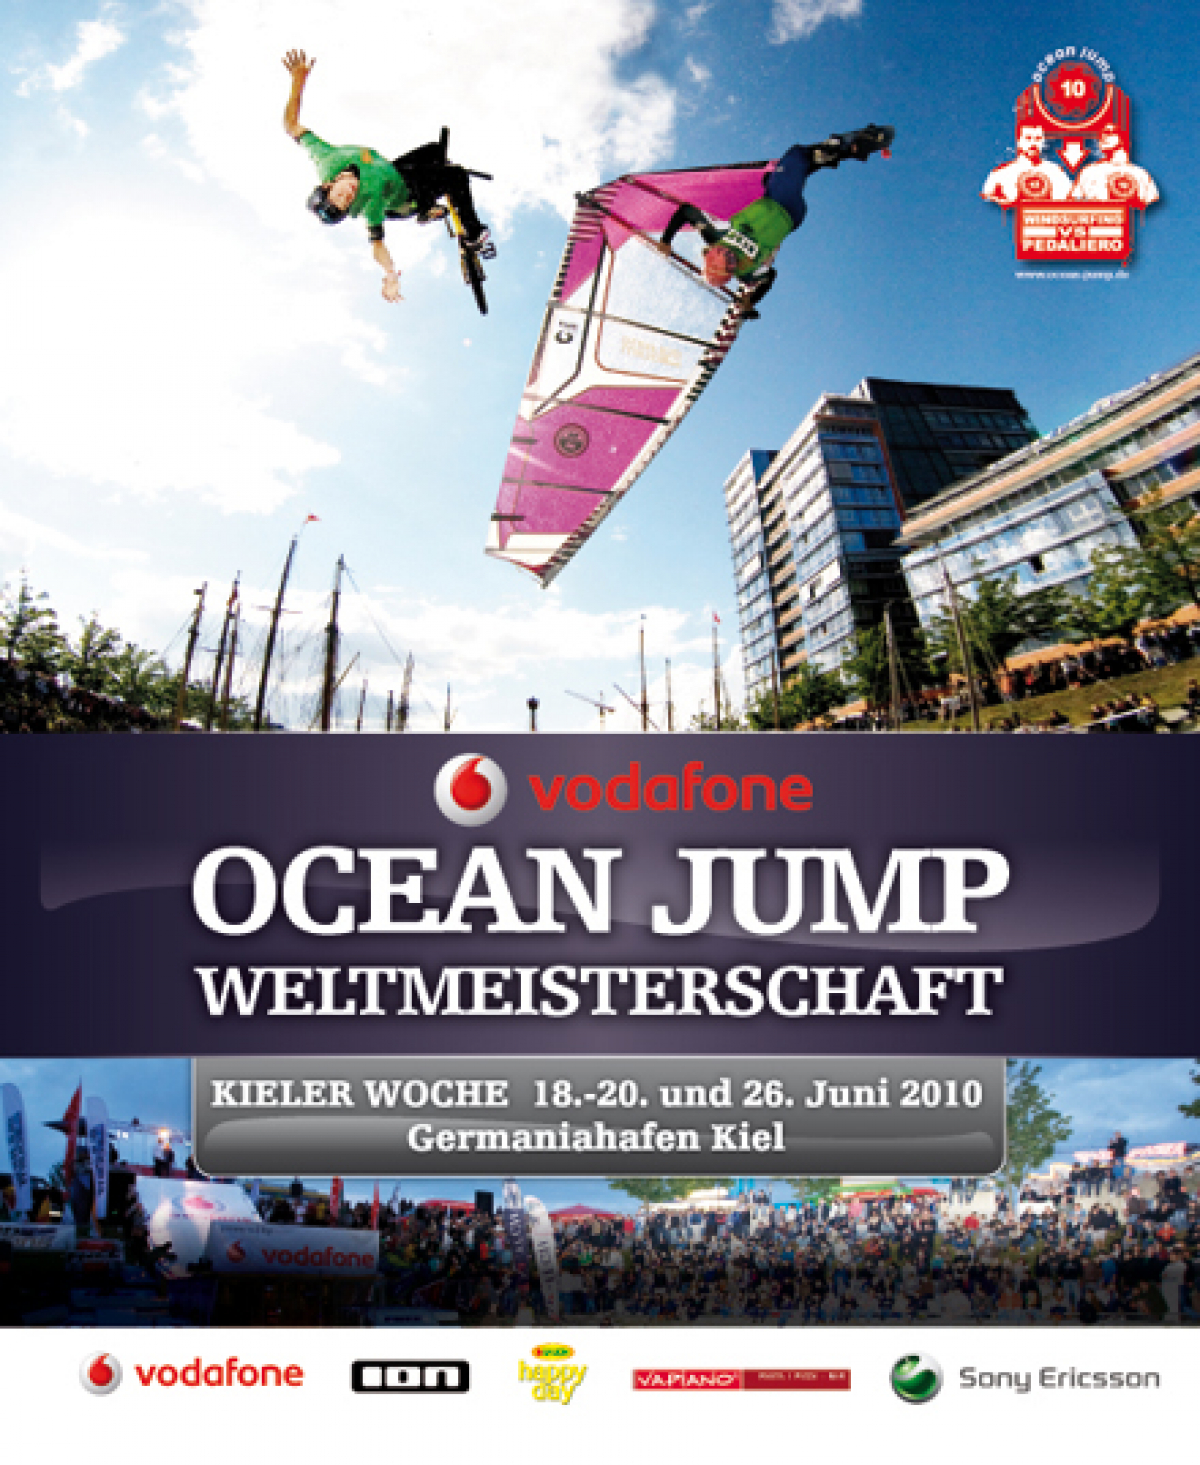 Ocean Jump 2010 - Unerschrockene gesucht